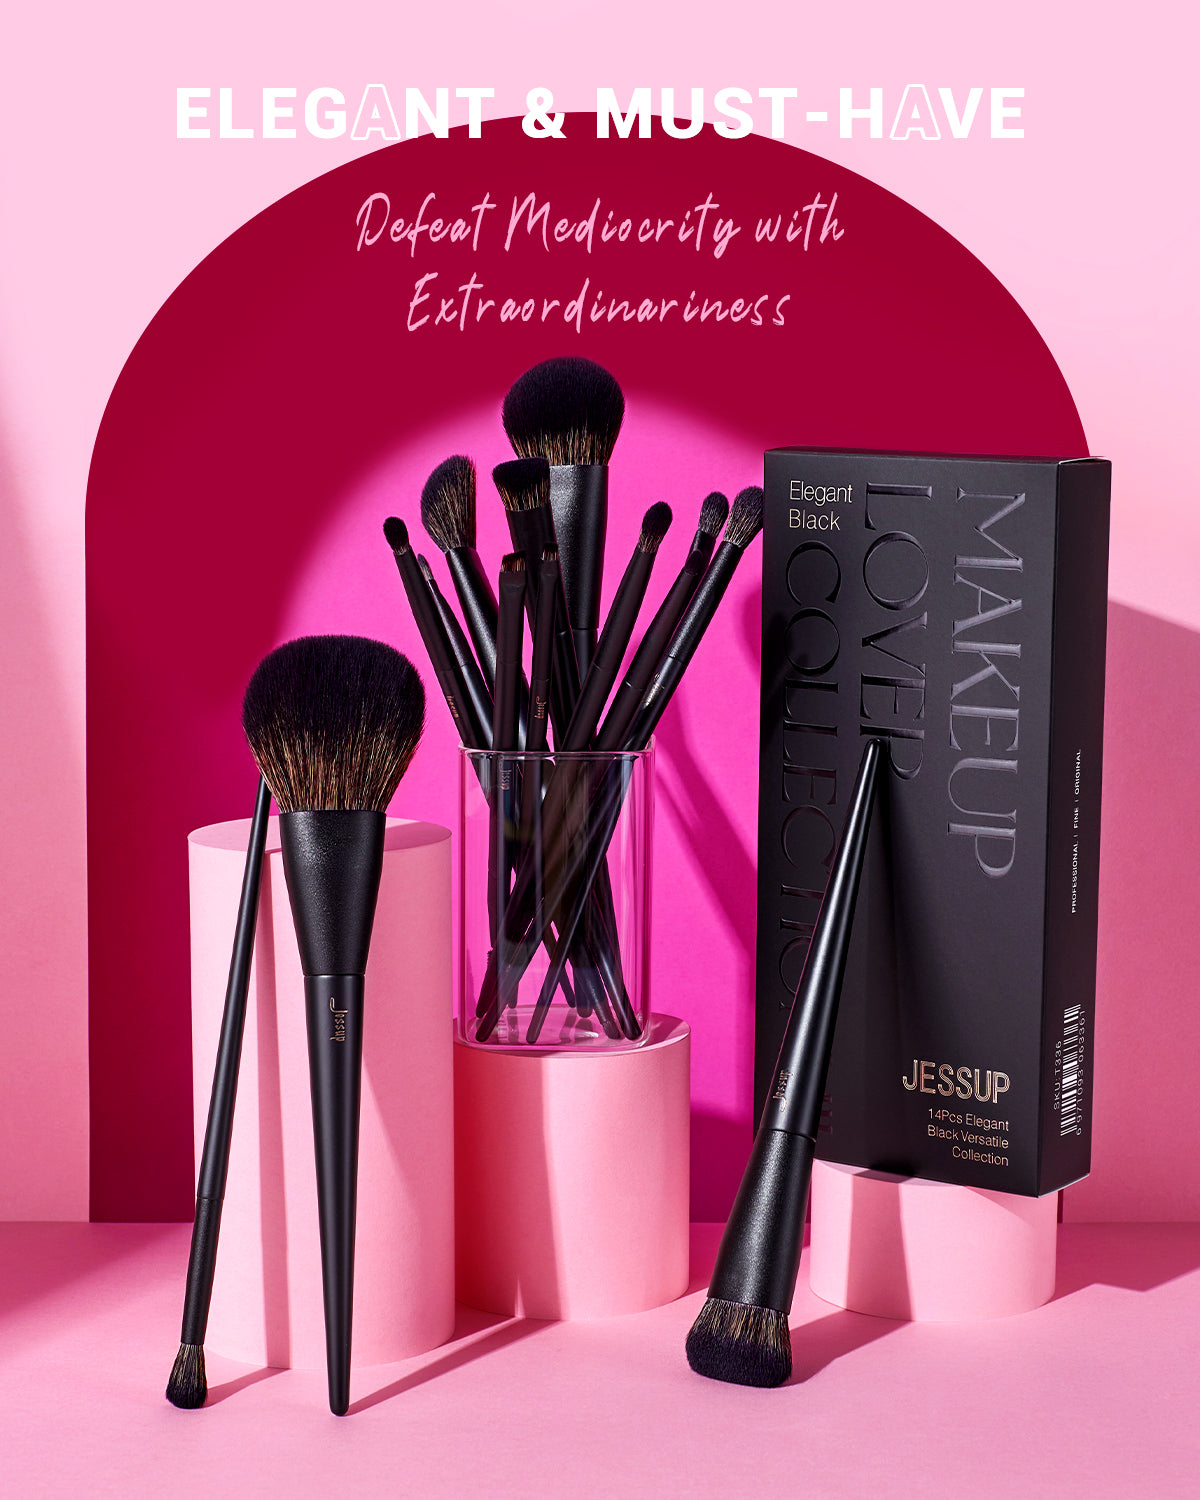 Jessup elegant black makeup brush set